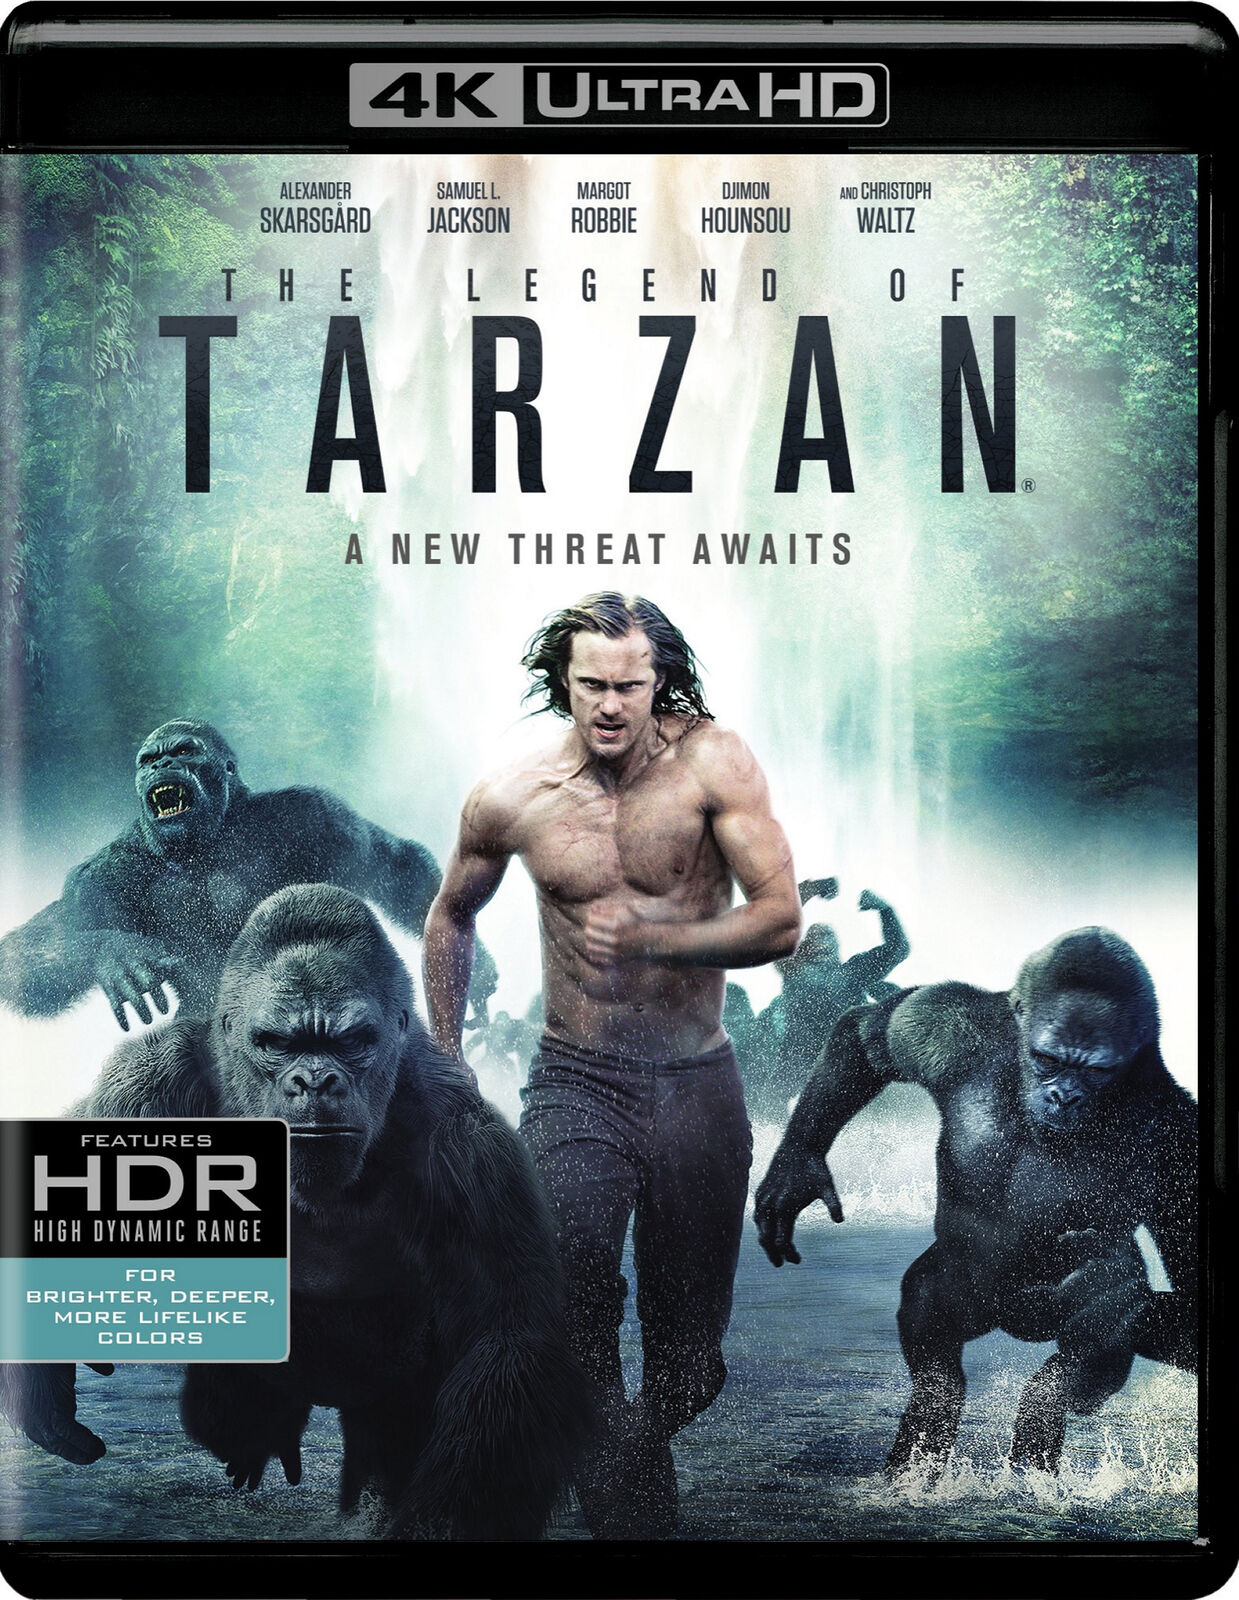 Legend Of Tarzan - 4K Blu-ray Action/Adventure 2016 PG-13